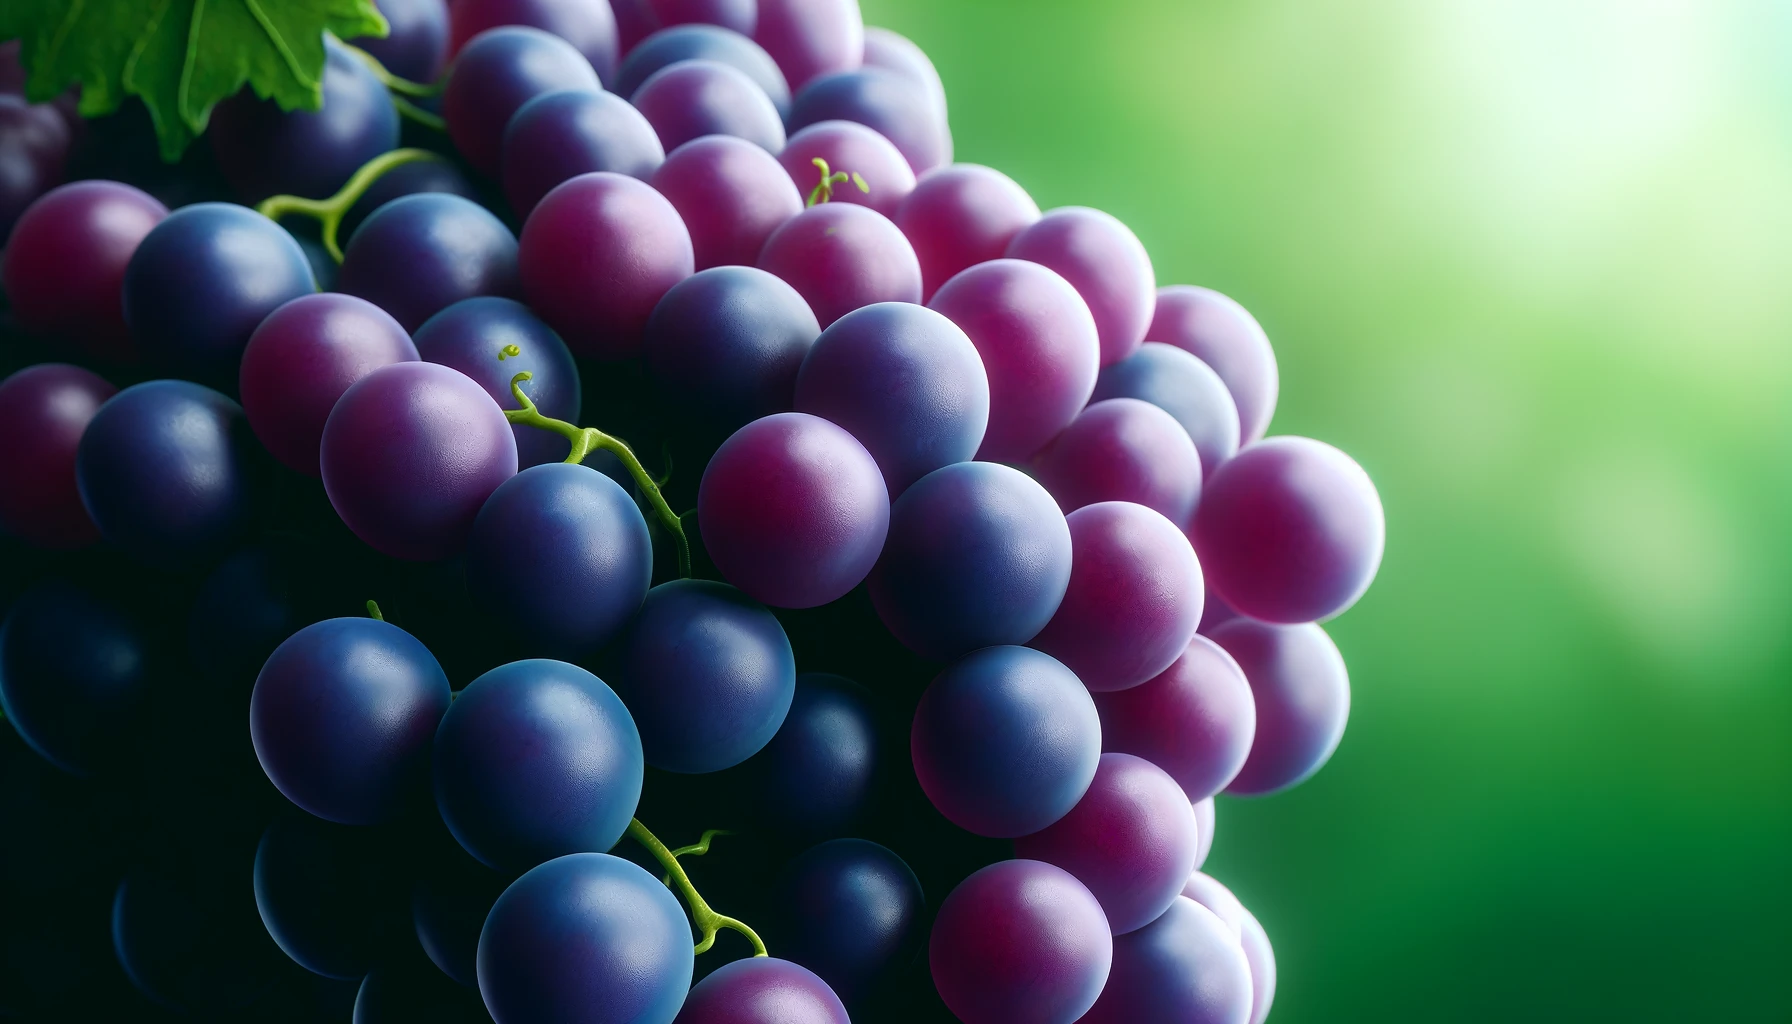 DALL·E 2024-05-23 10.20.04 - Photorealistic stock image of Aglianico grapes, closely focused on a cluster of ripe Aglianico grapes with vibrant, deep purple skins.